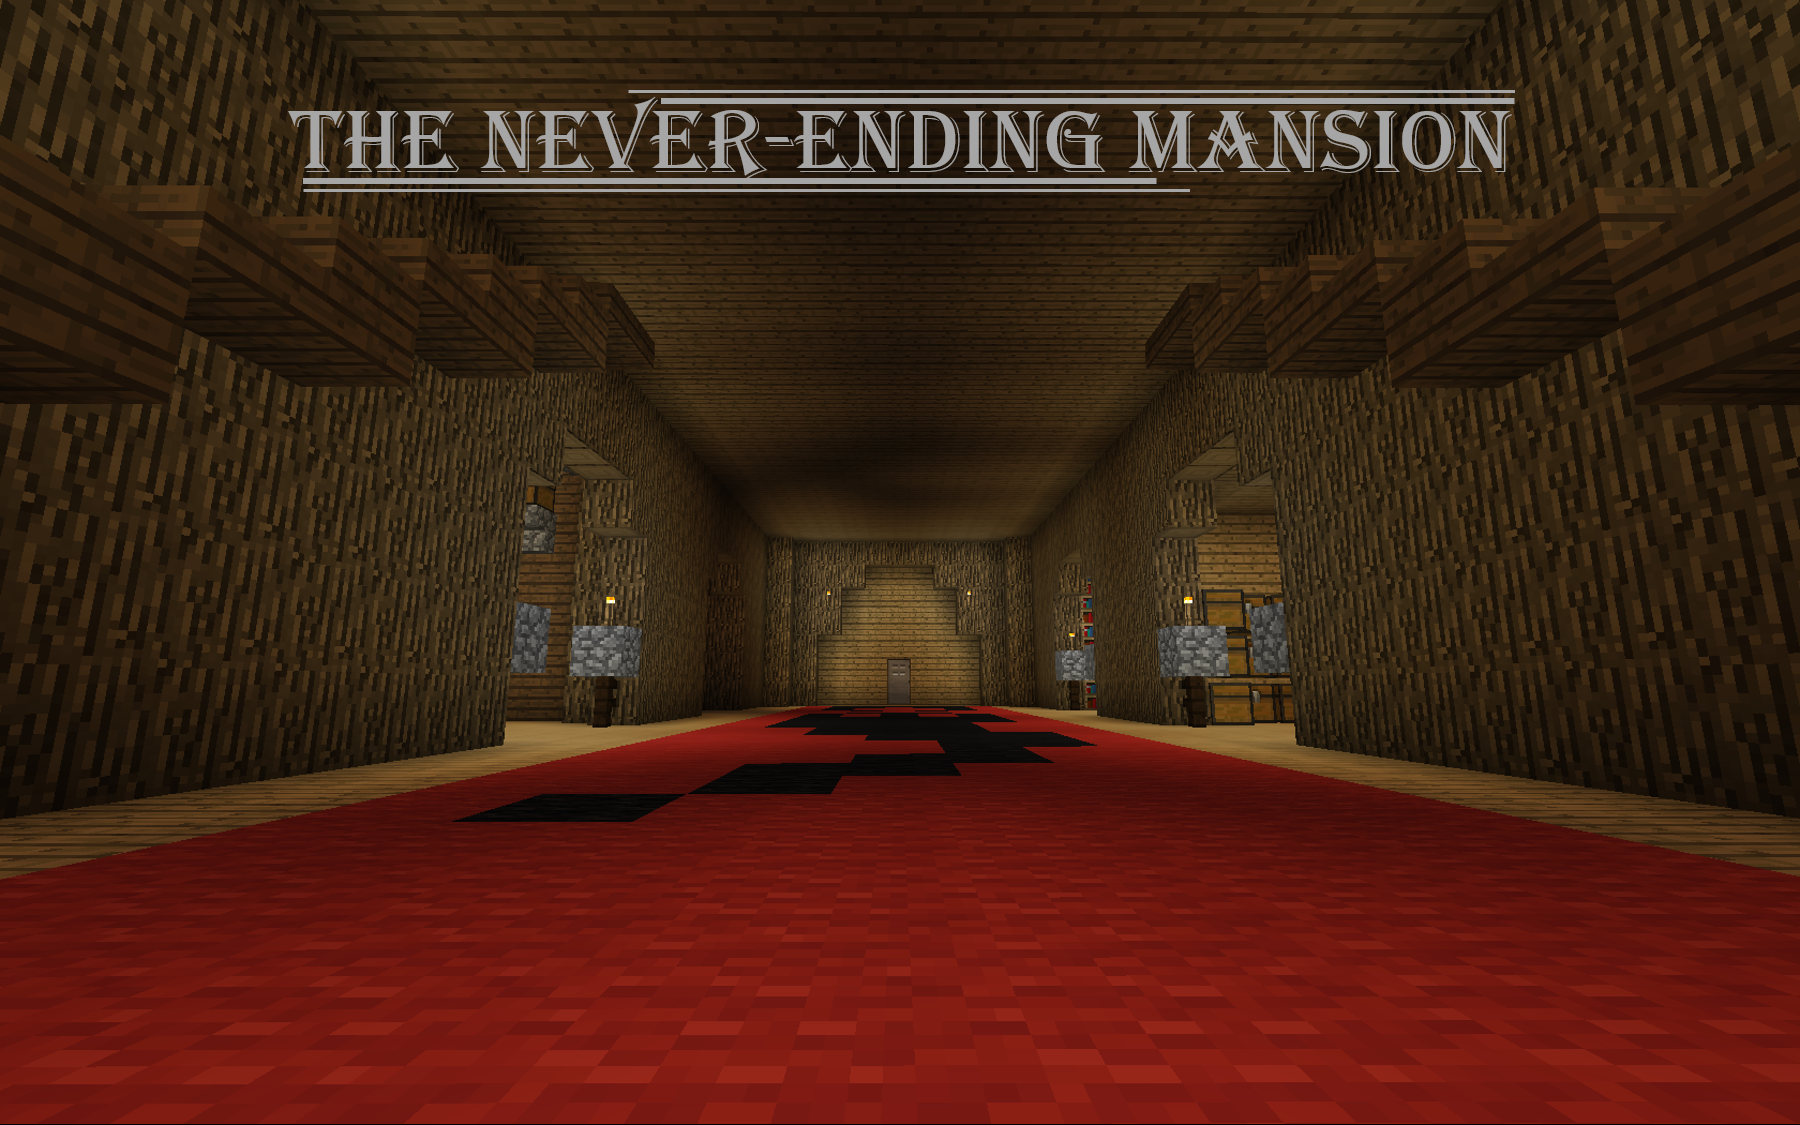 Baixar The Neverending Mansion para Minecraft 1.13.2